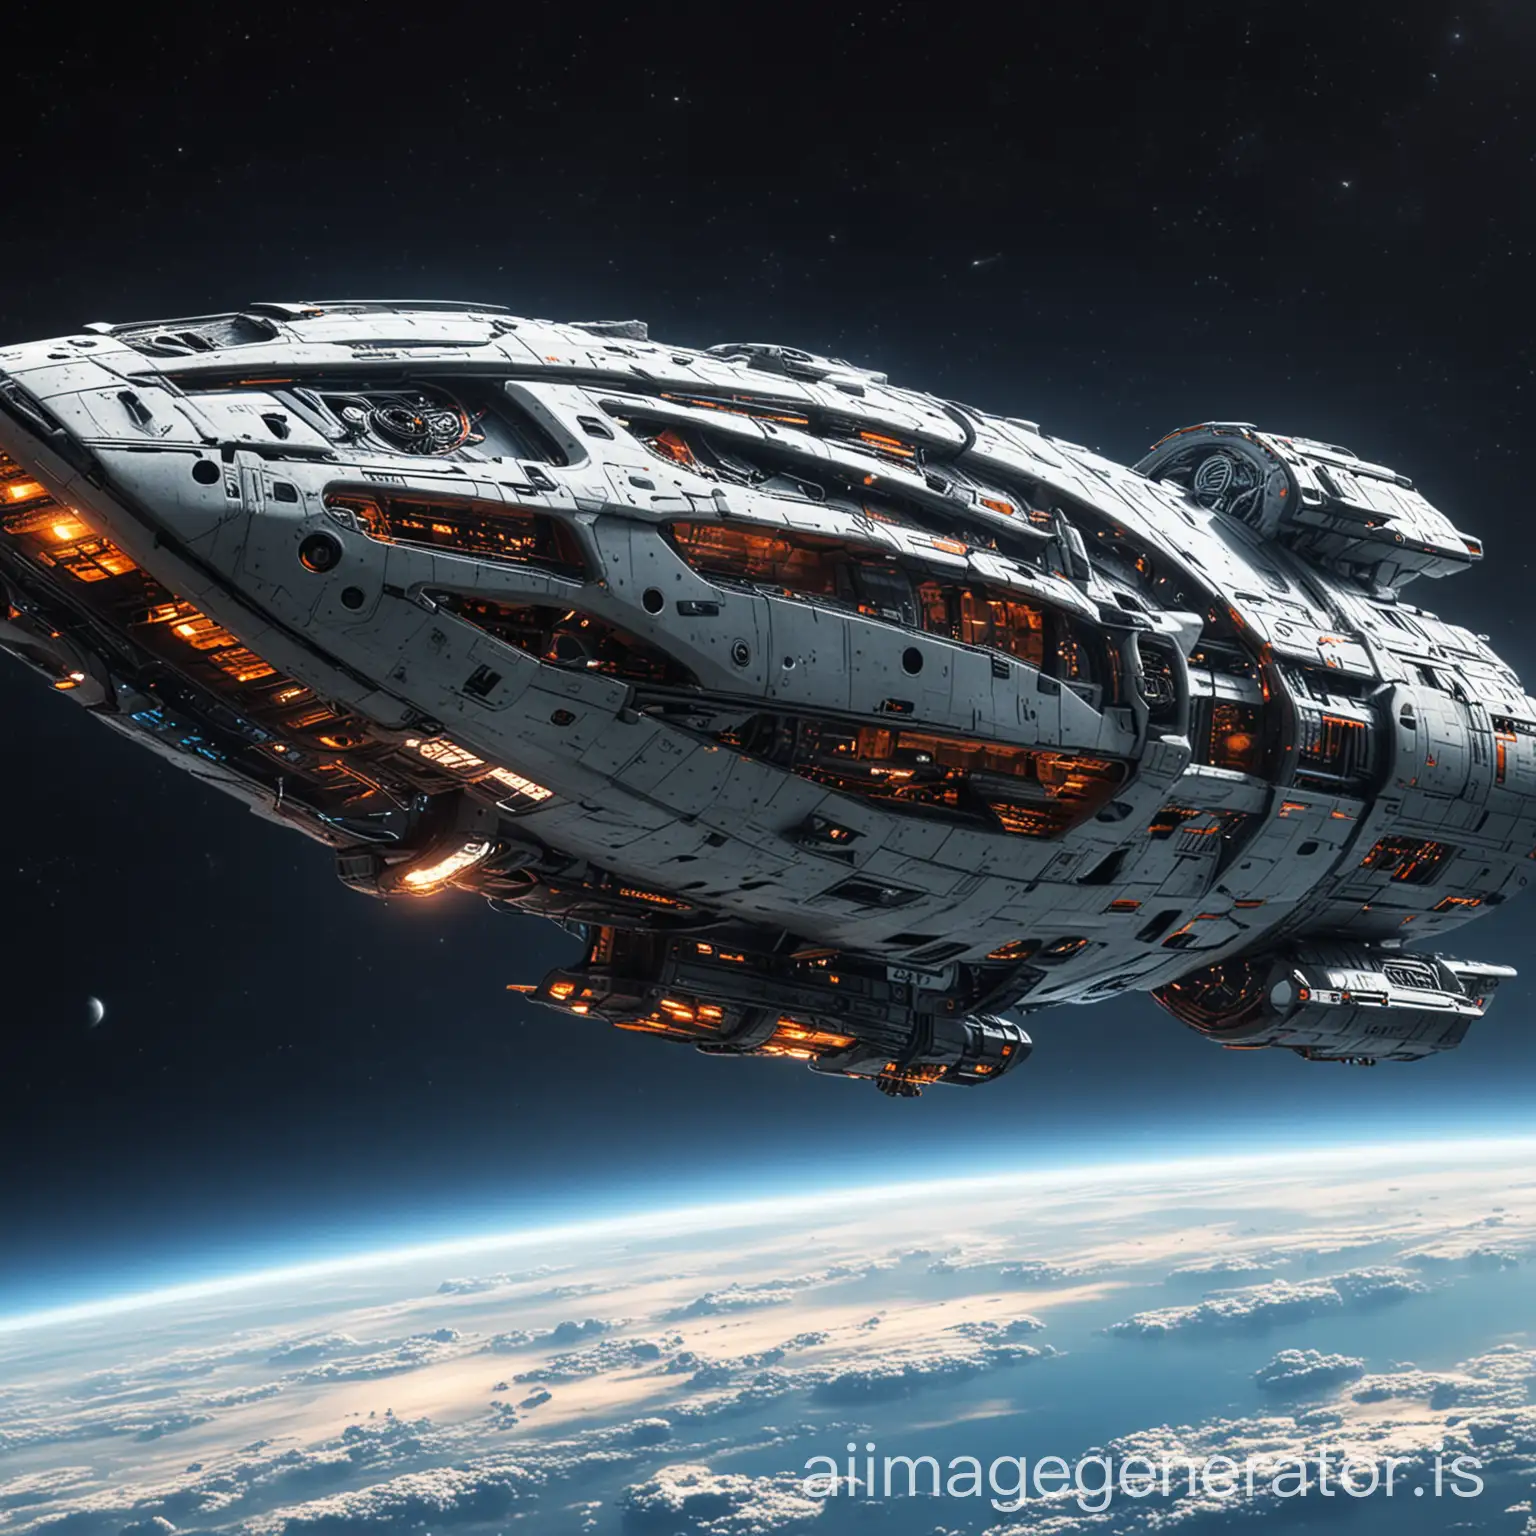 a futuristic space ship